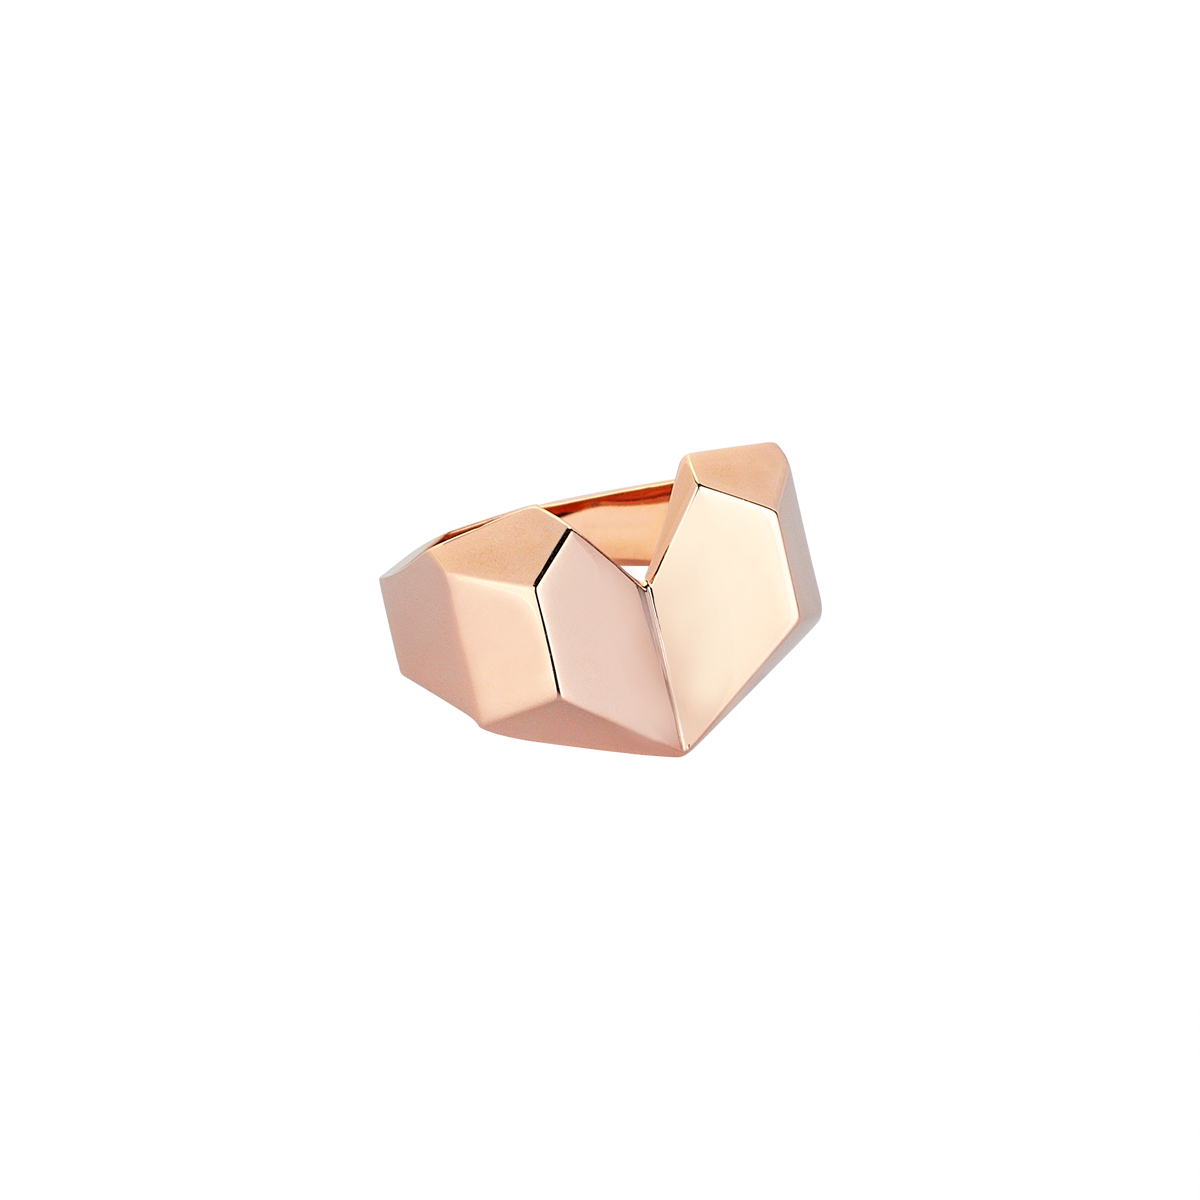 Origami Love Little Finger Ring in Rose Gold - Her Story Shop